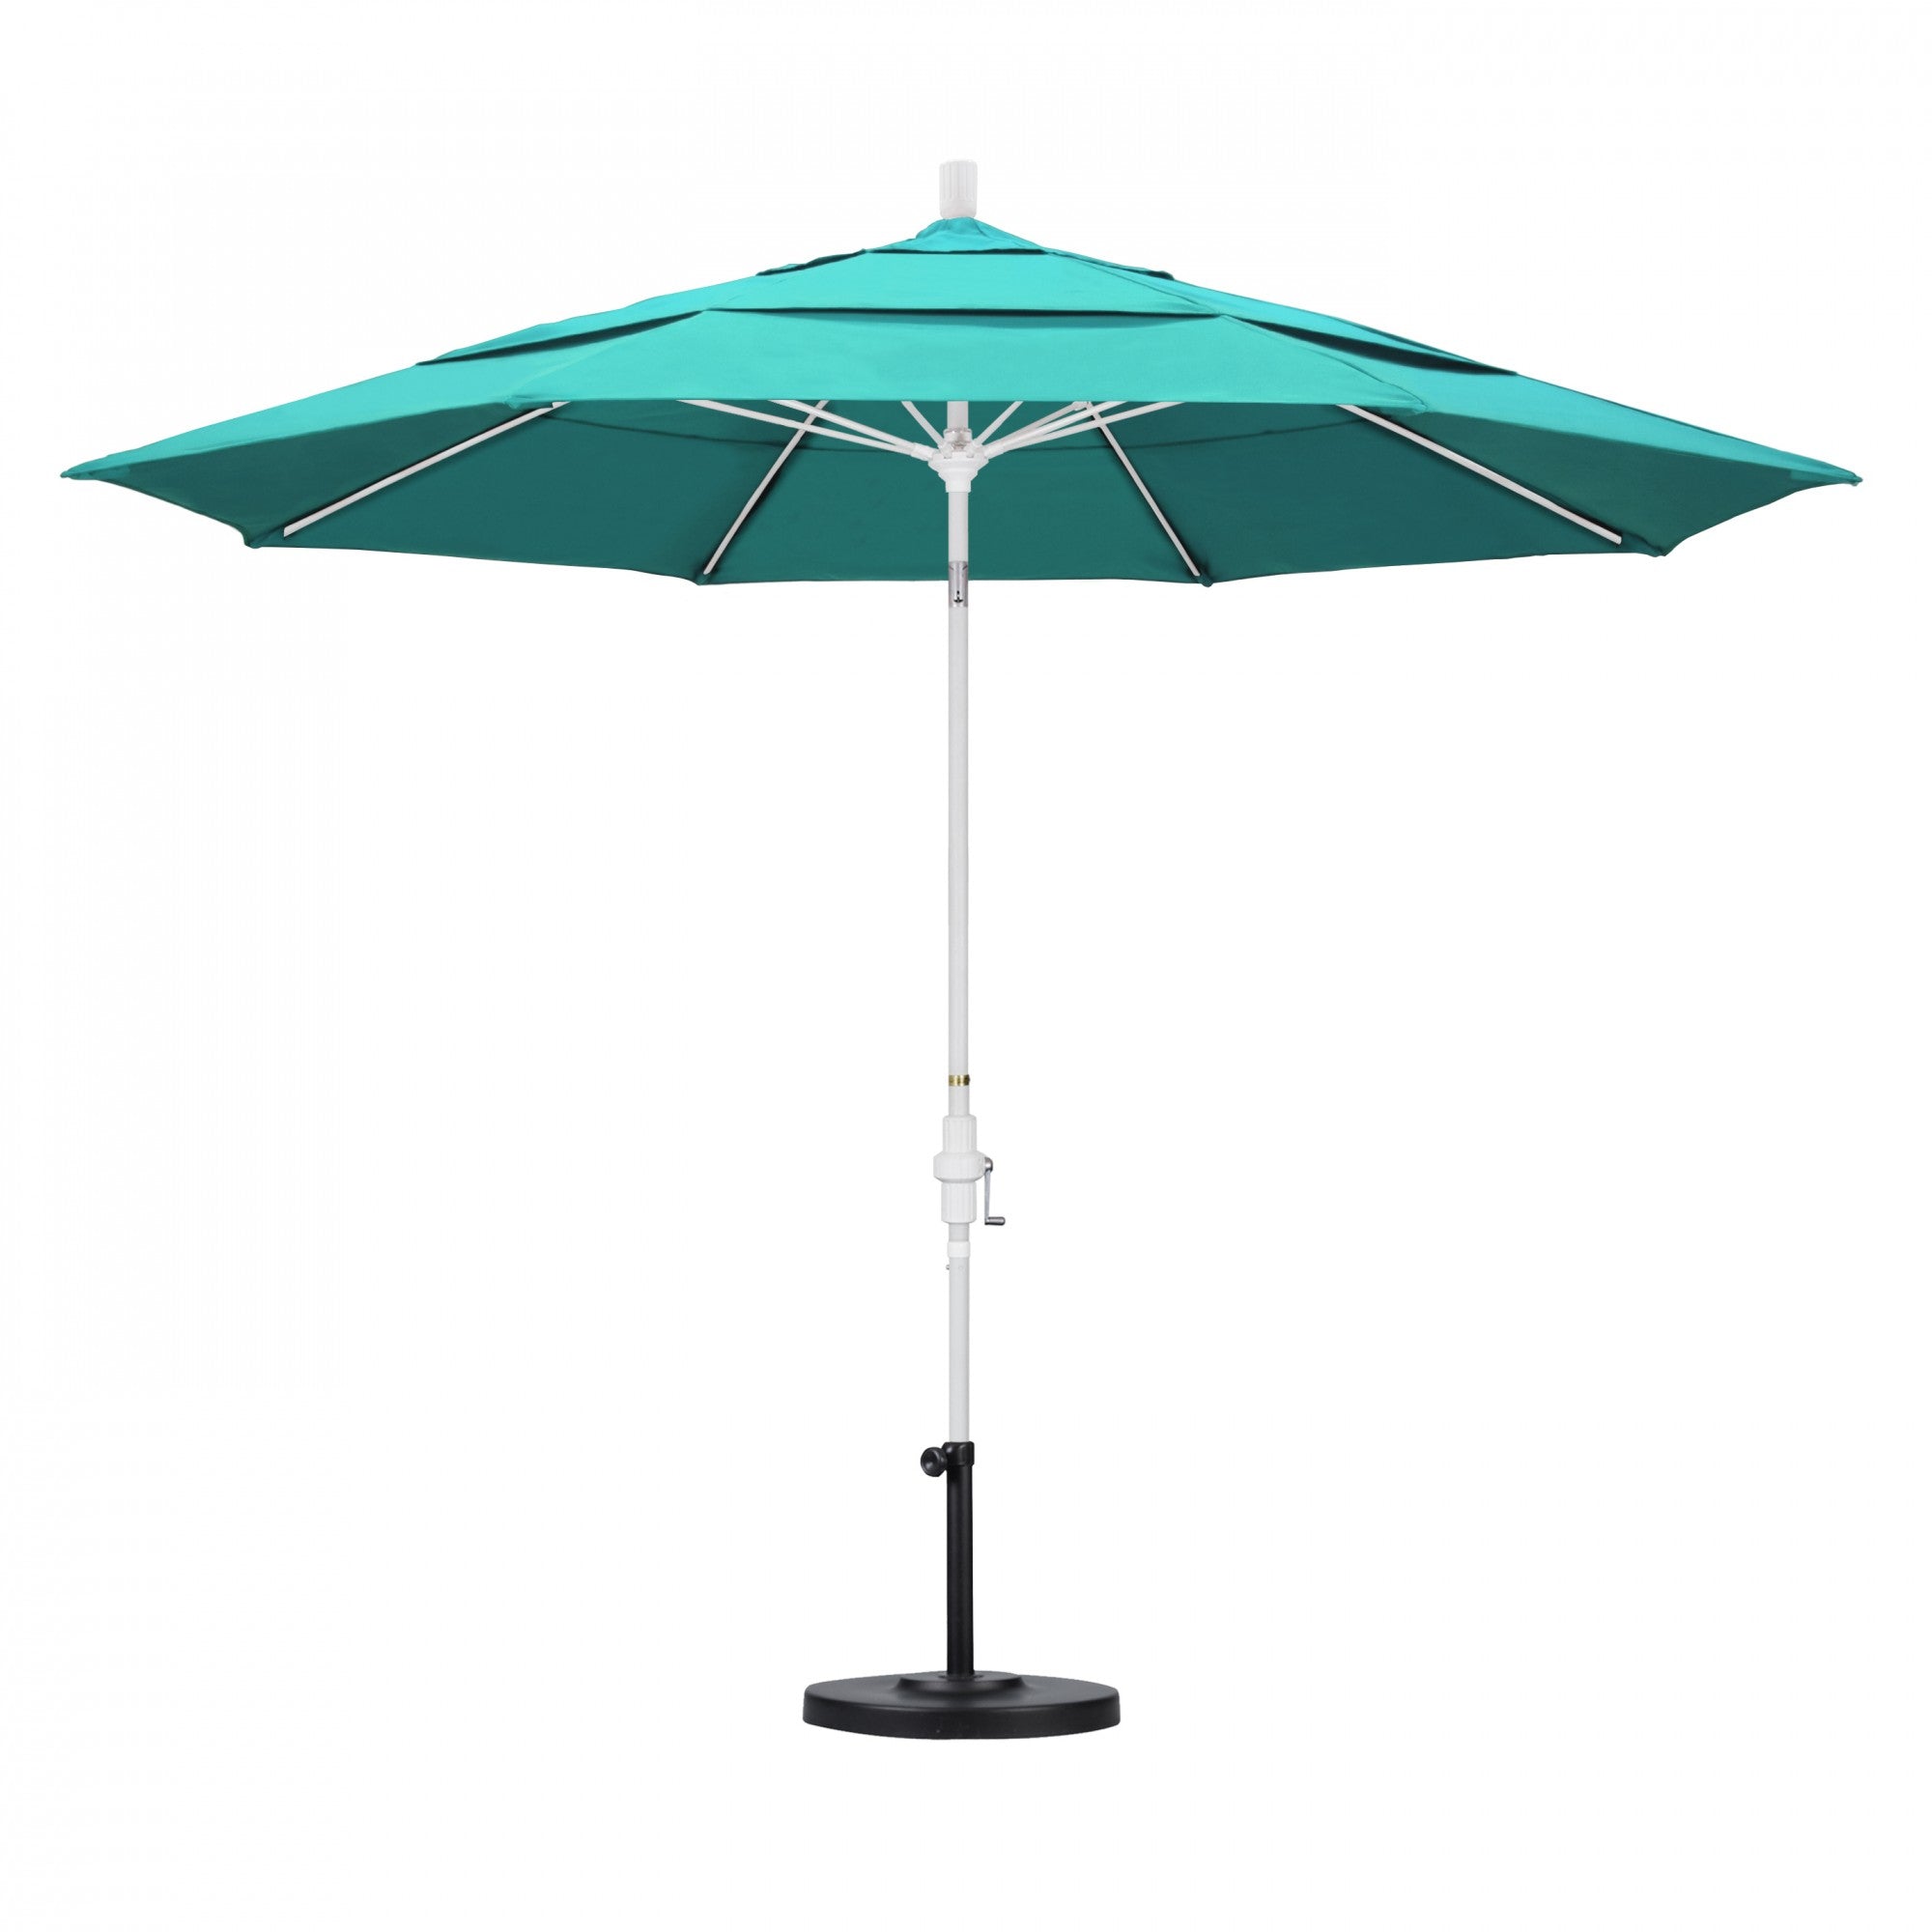 California Umbrella - 11' - Patio Umbrella Umbrella - Aluminum Pole - Aruba - Sunbrella  - GSCUF118170-5416-DWV